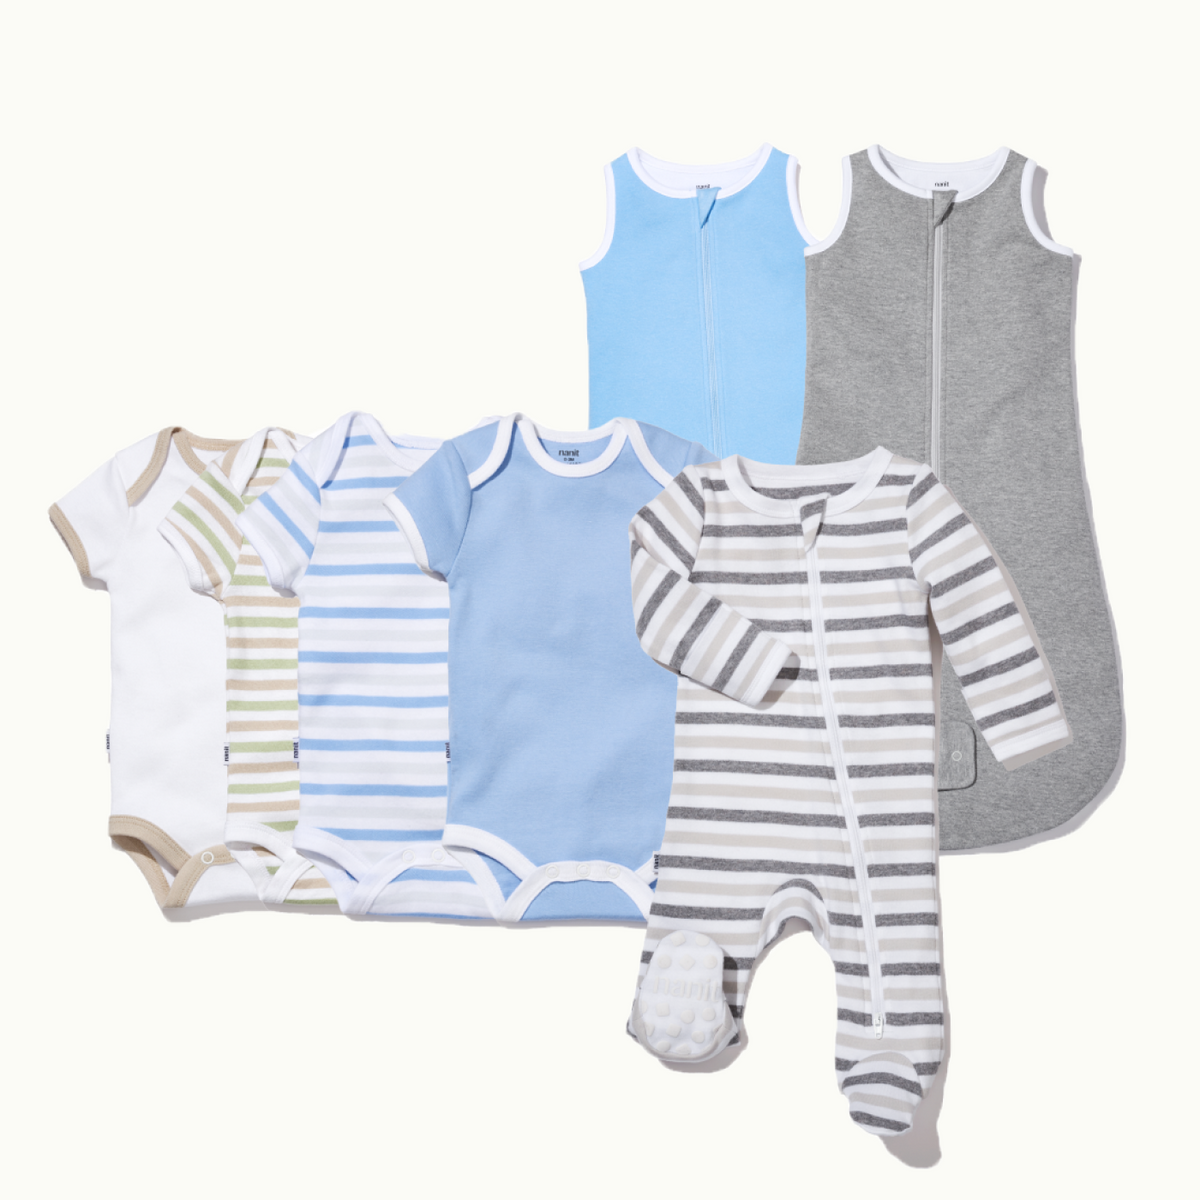 4 bodysuits, 2 sleeping bags, & 1 pajama in white, pistachio stripe, cornflower blue stripe, cornflower blue & heather gray